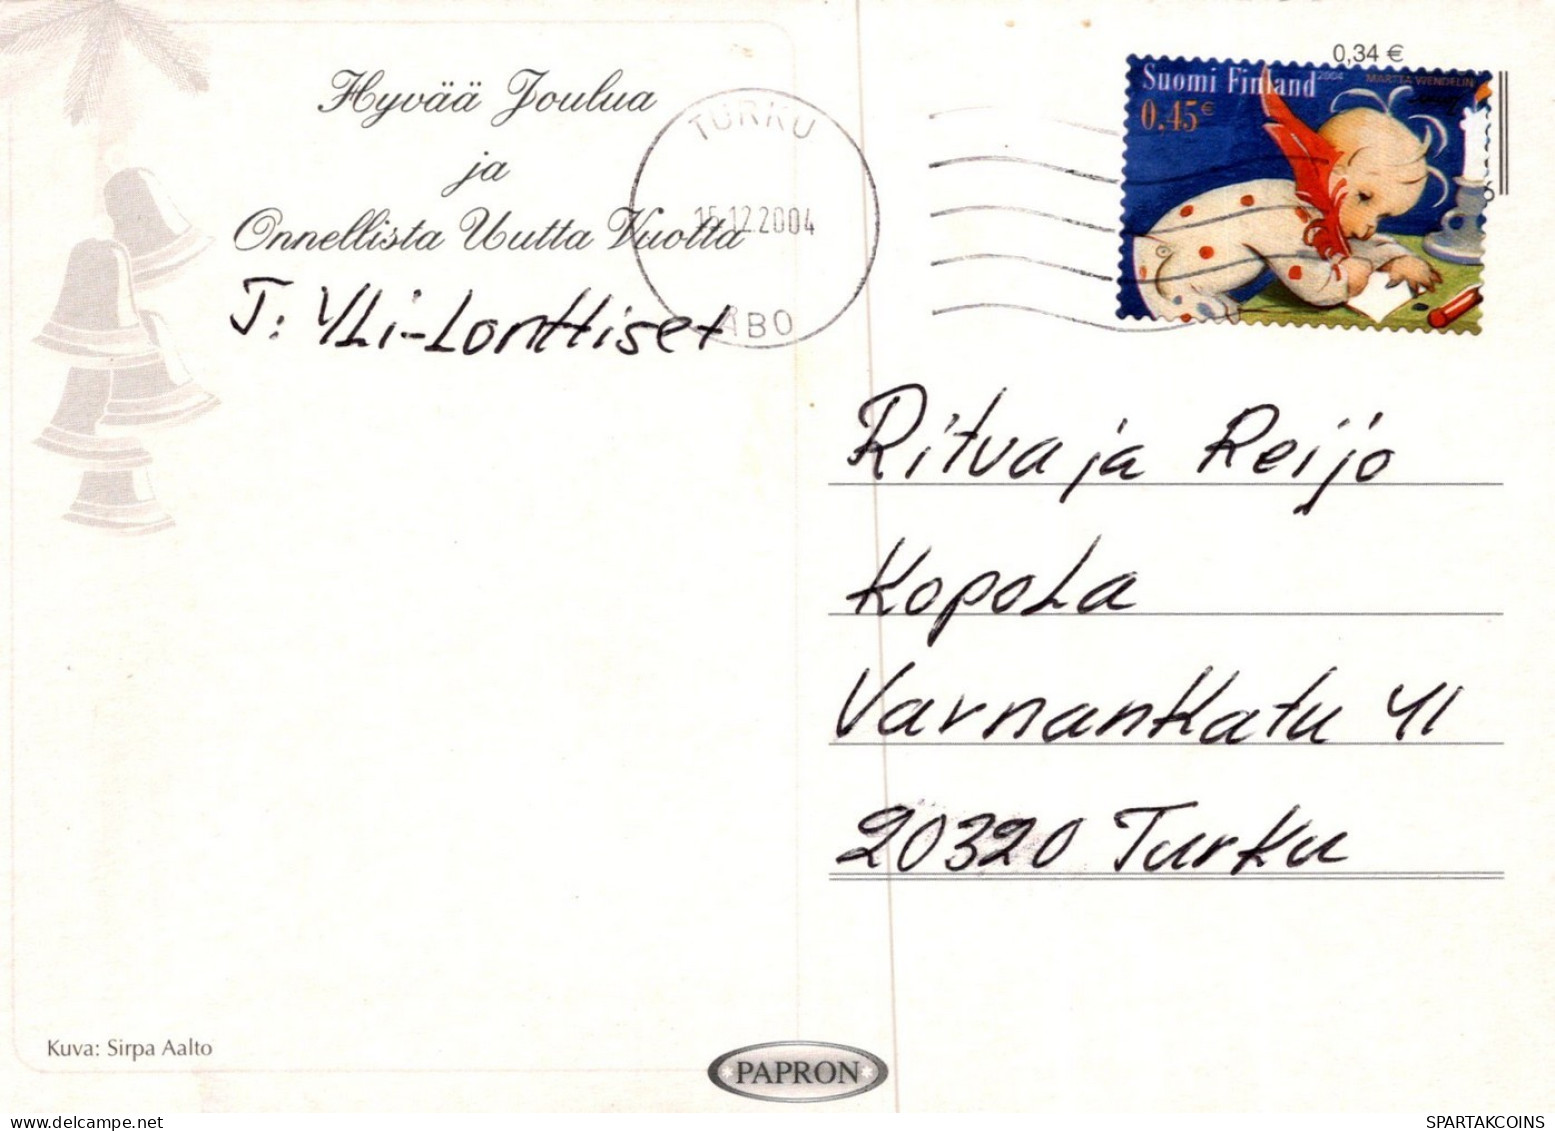 BABBO NATALE Natale Vintage Cartolina CPSM #PAK162.IT - Santa Claus